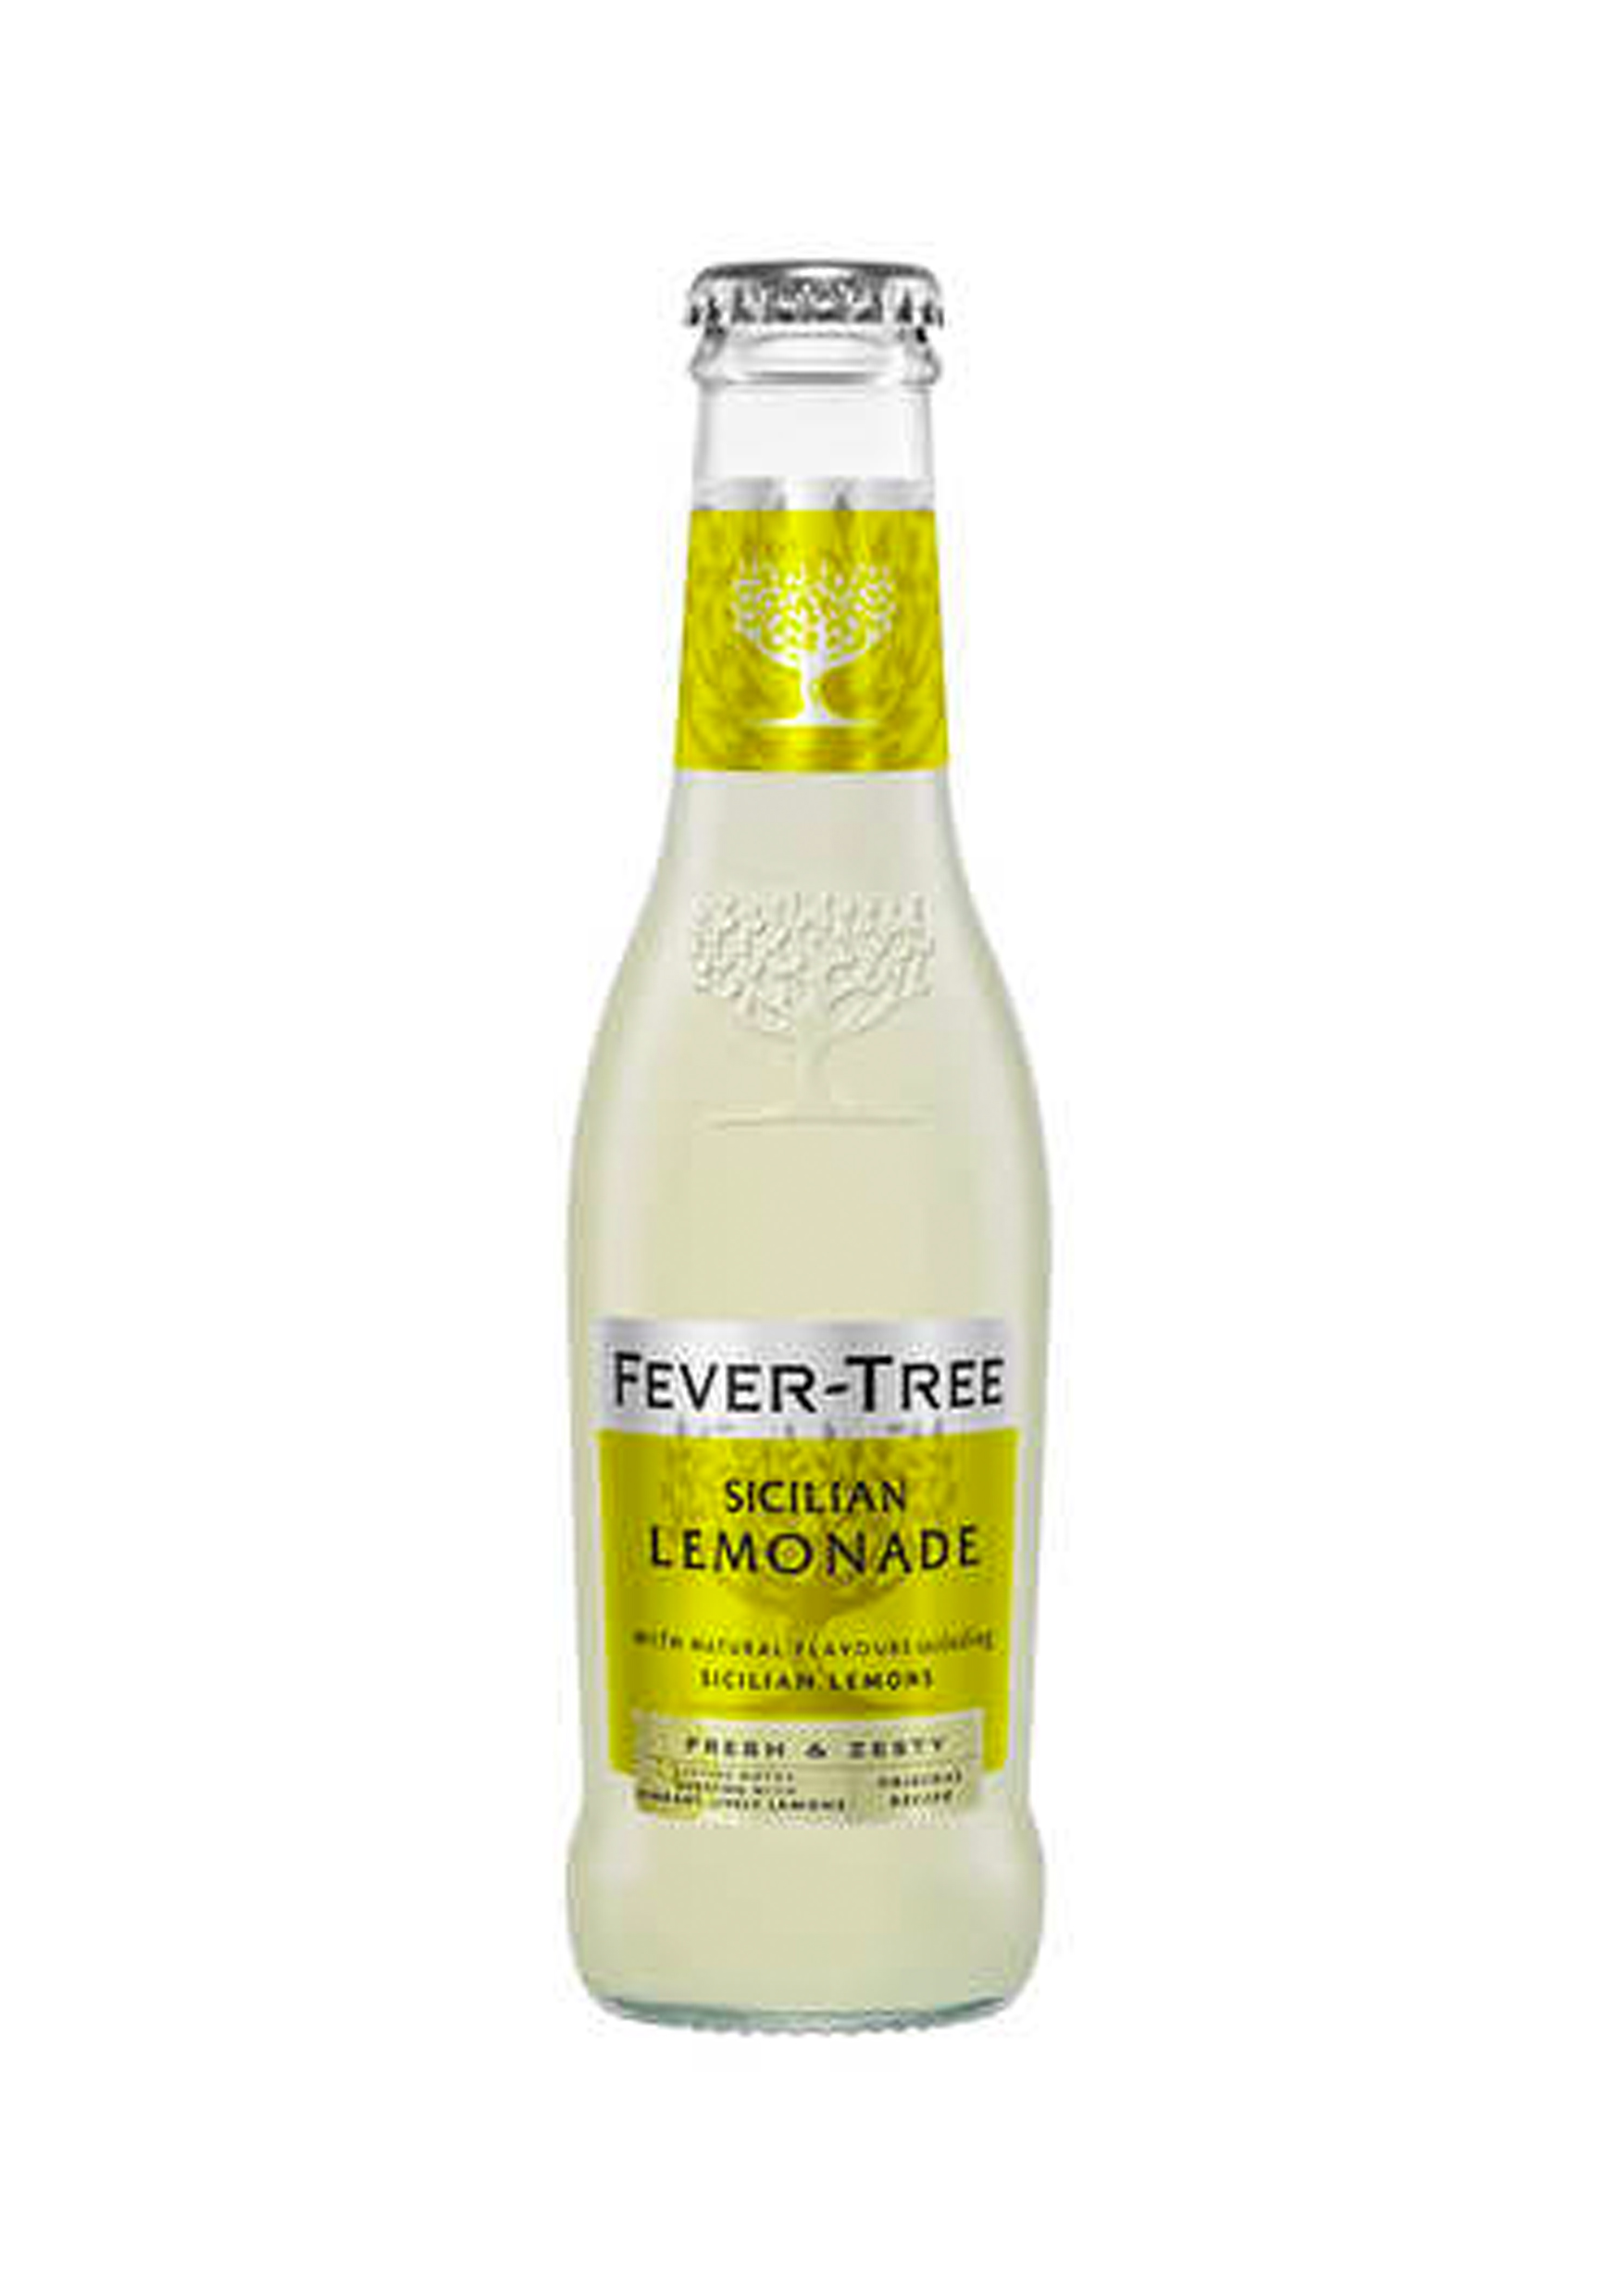 Fevertree Sicilian Lemonade